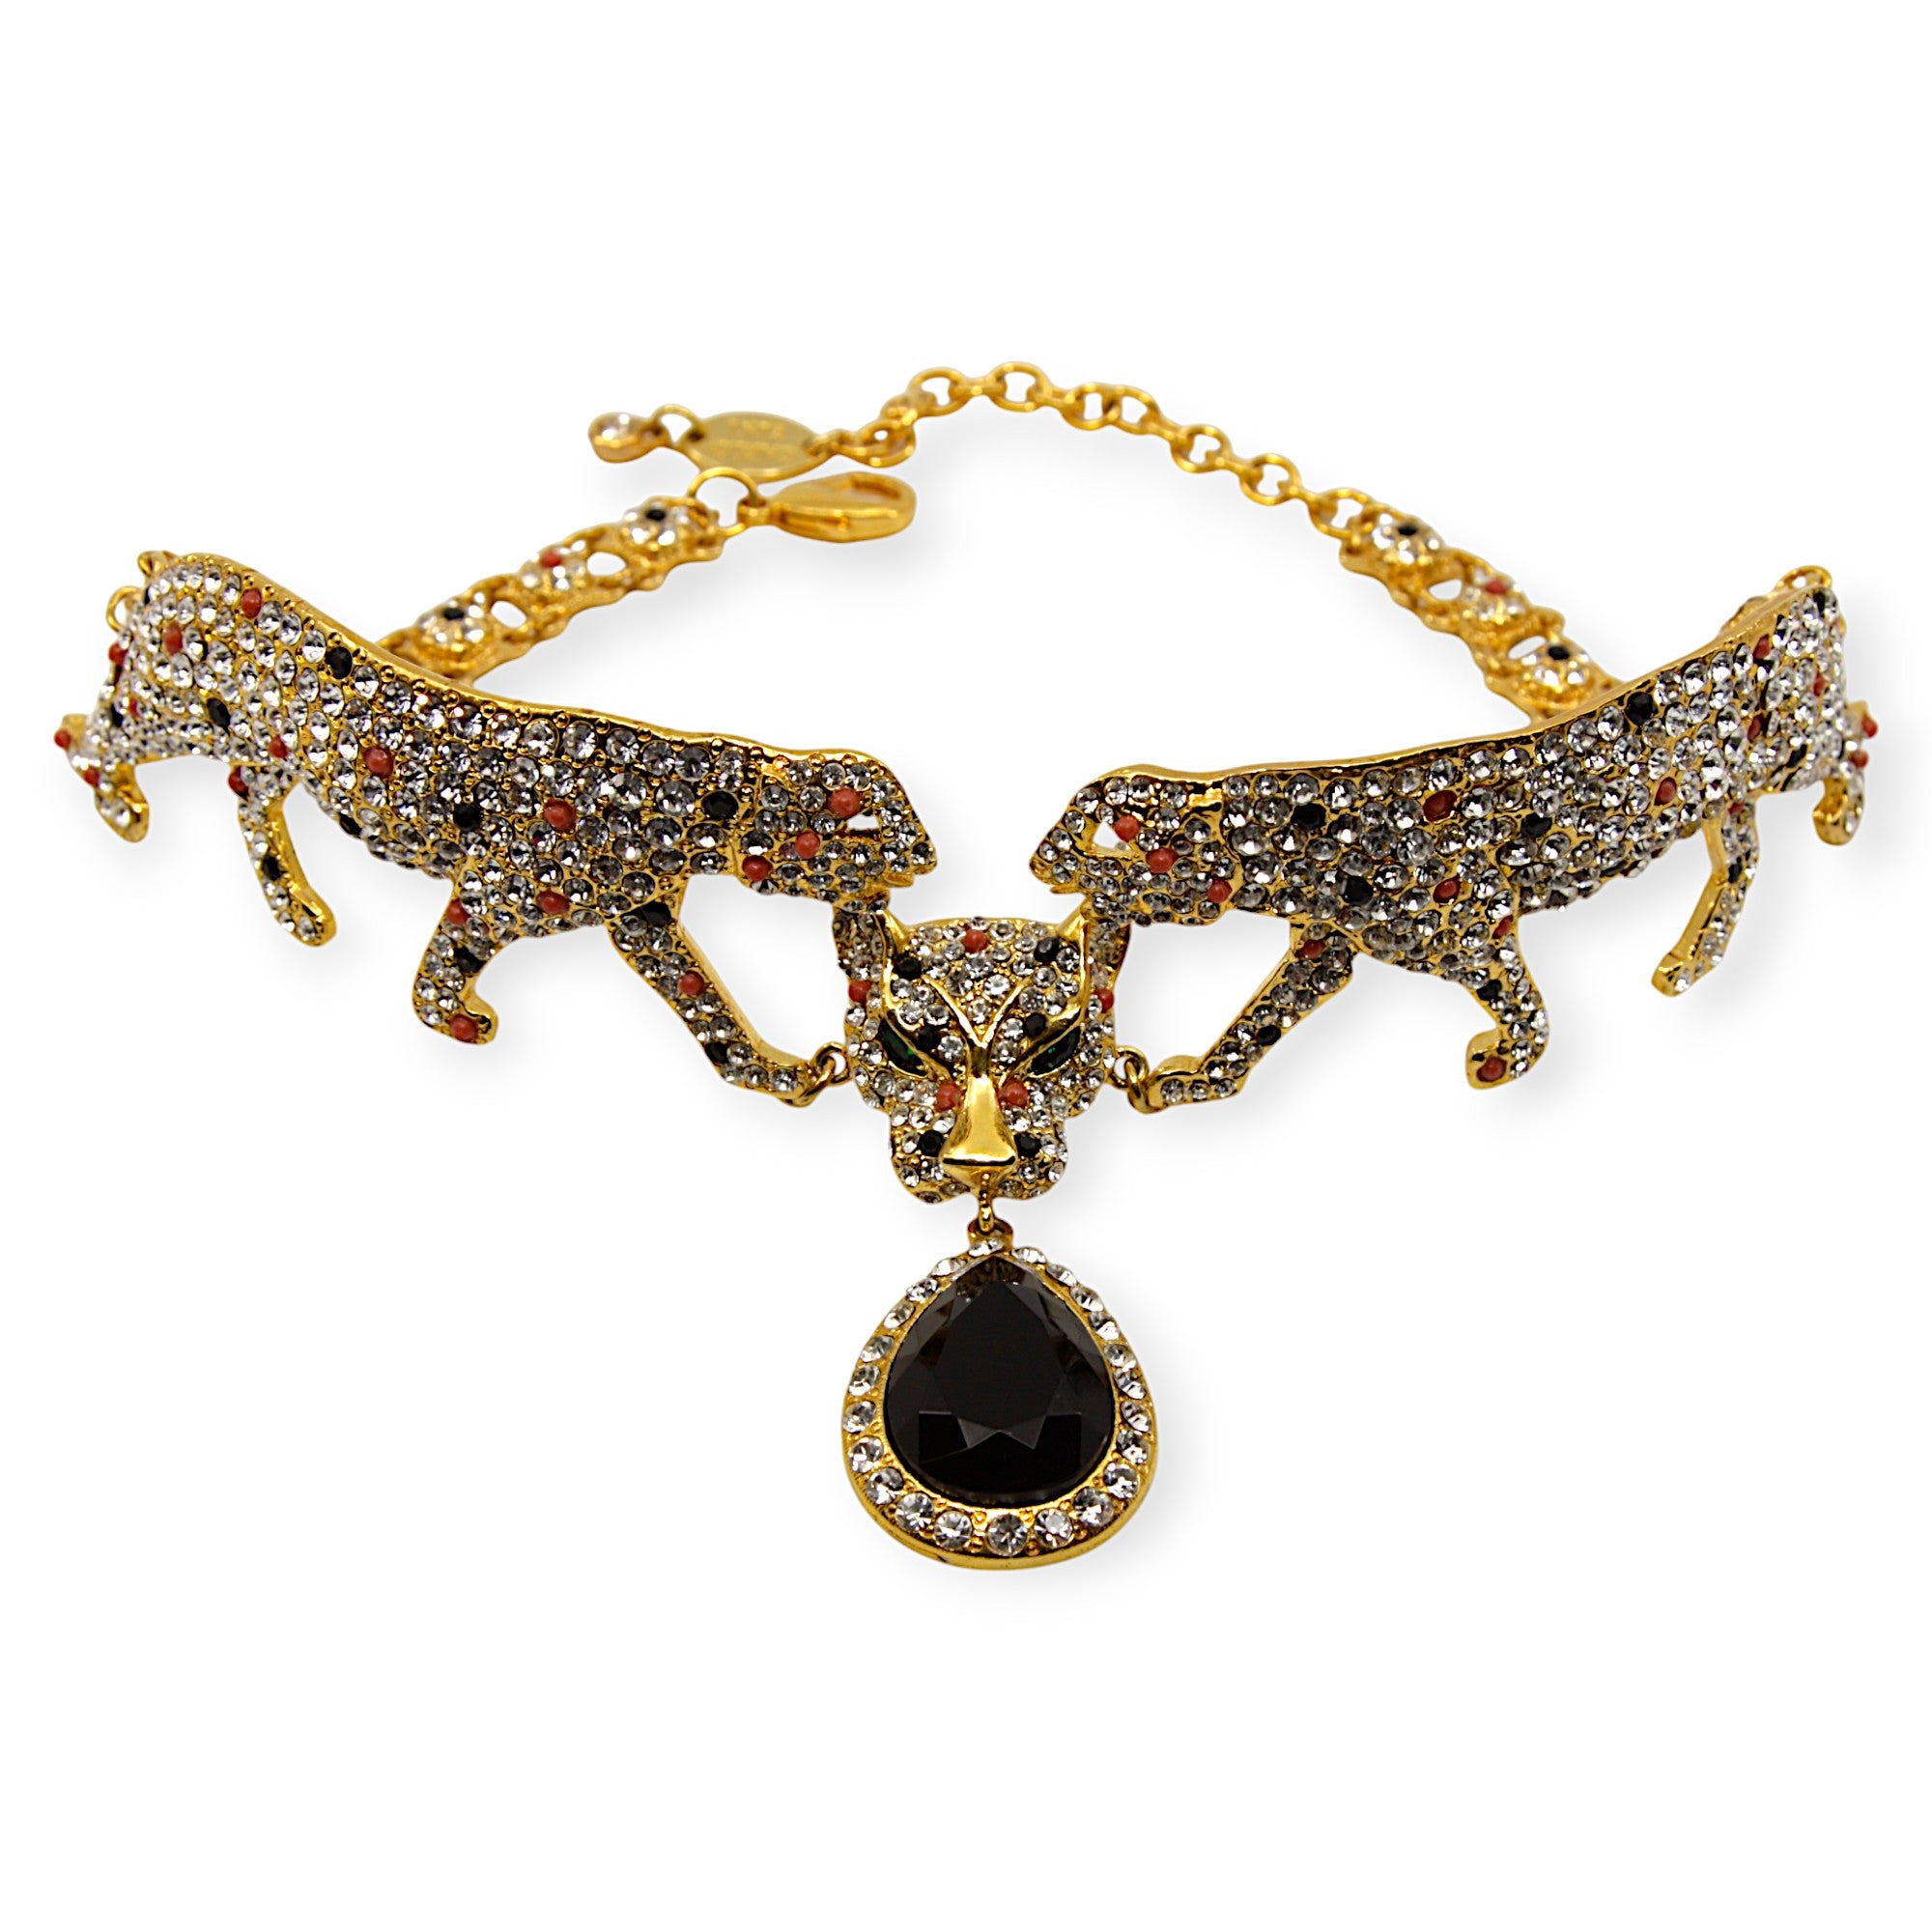 Jaguar Chocker Necklace With Black Drop